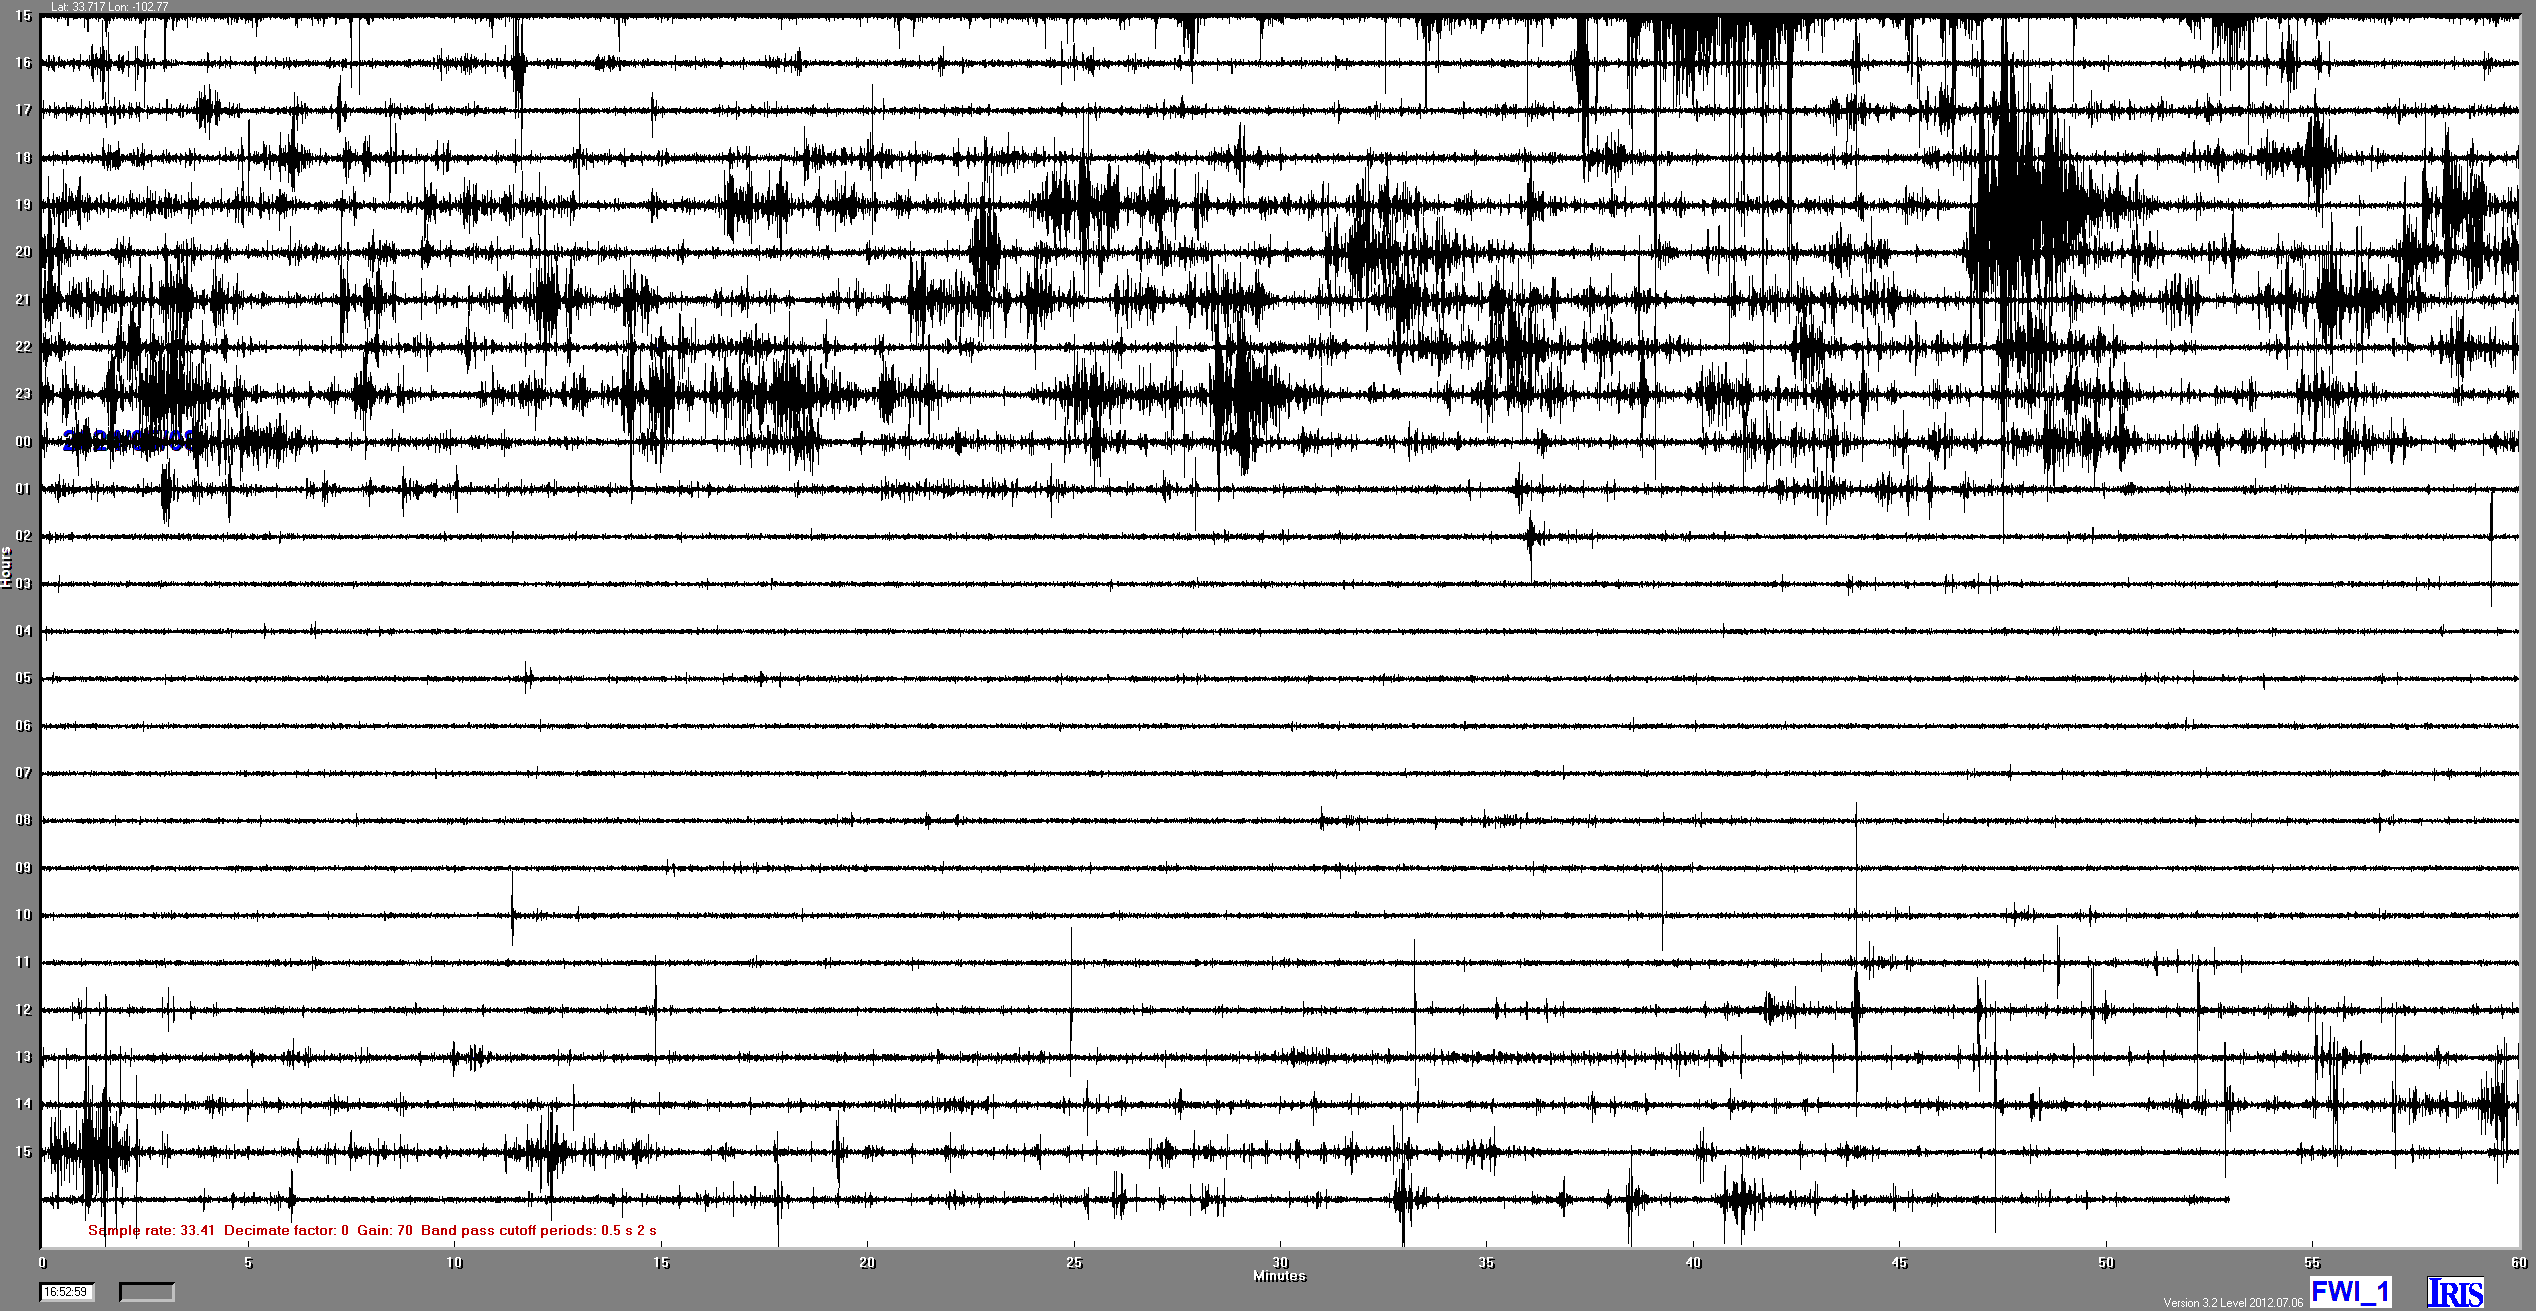 Current Earthquakes I'm Sensing ... ( last 24 hours )